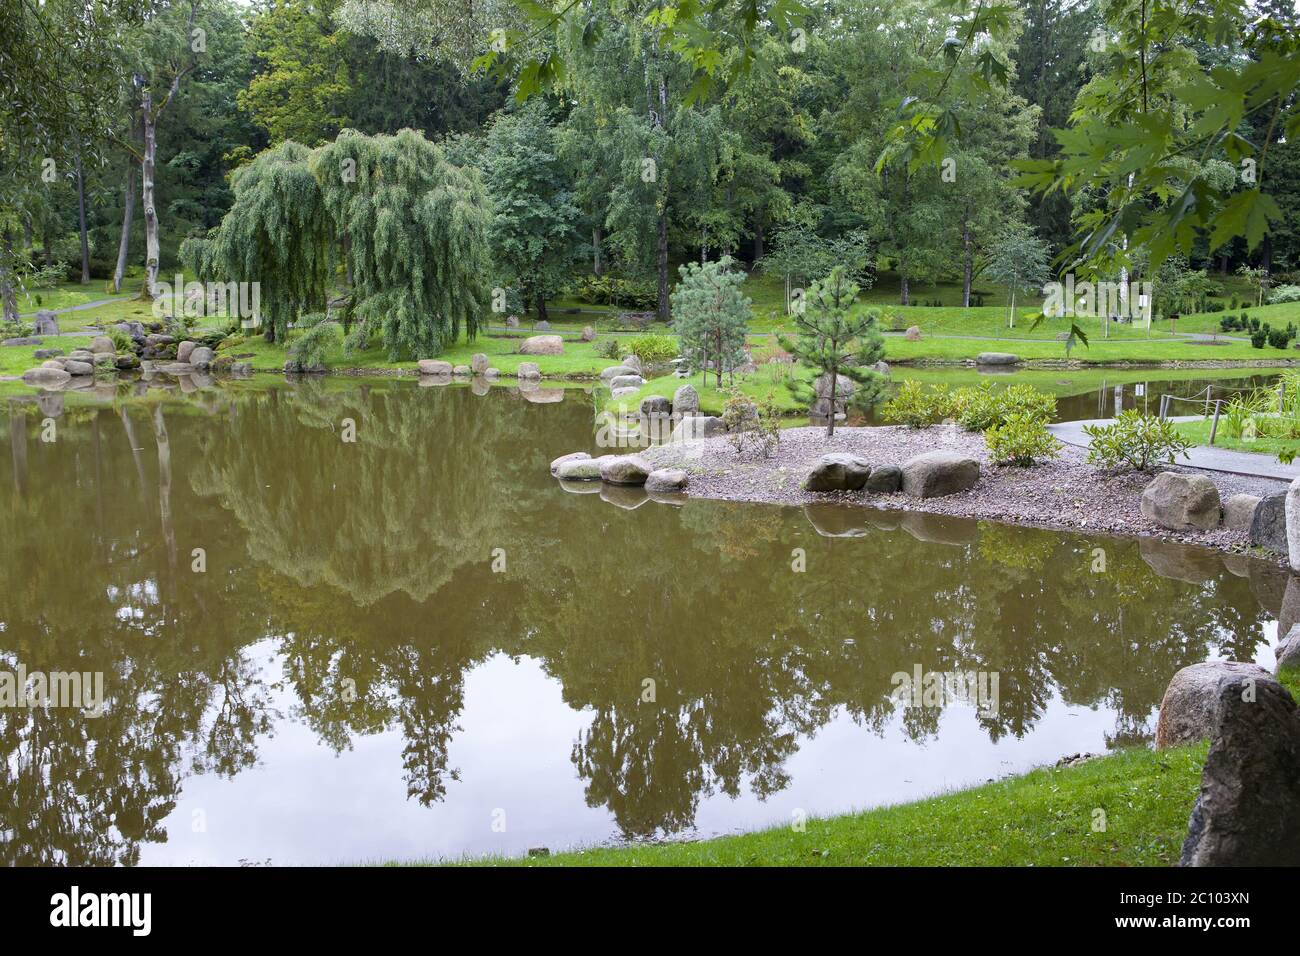 Il giardino giapponese nel parco Kadriorg il 7 settembre 2015 a Tallinn, Estonia Foto Stock